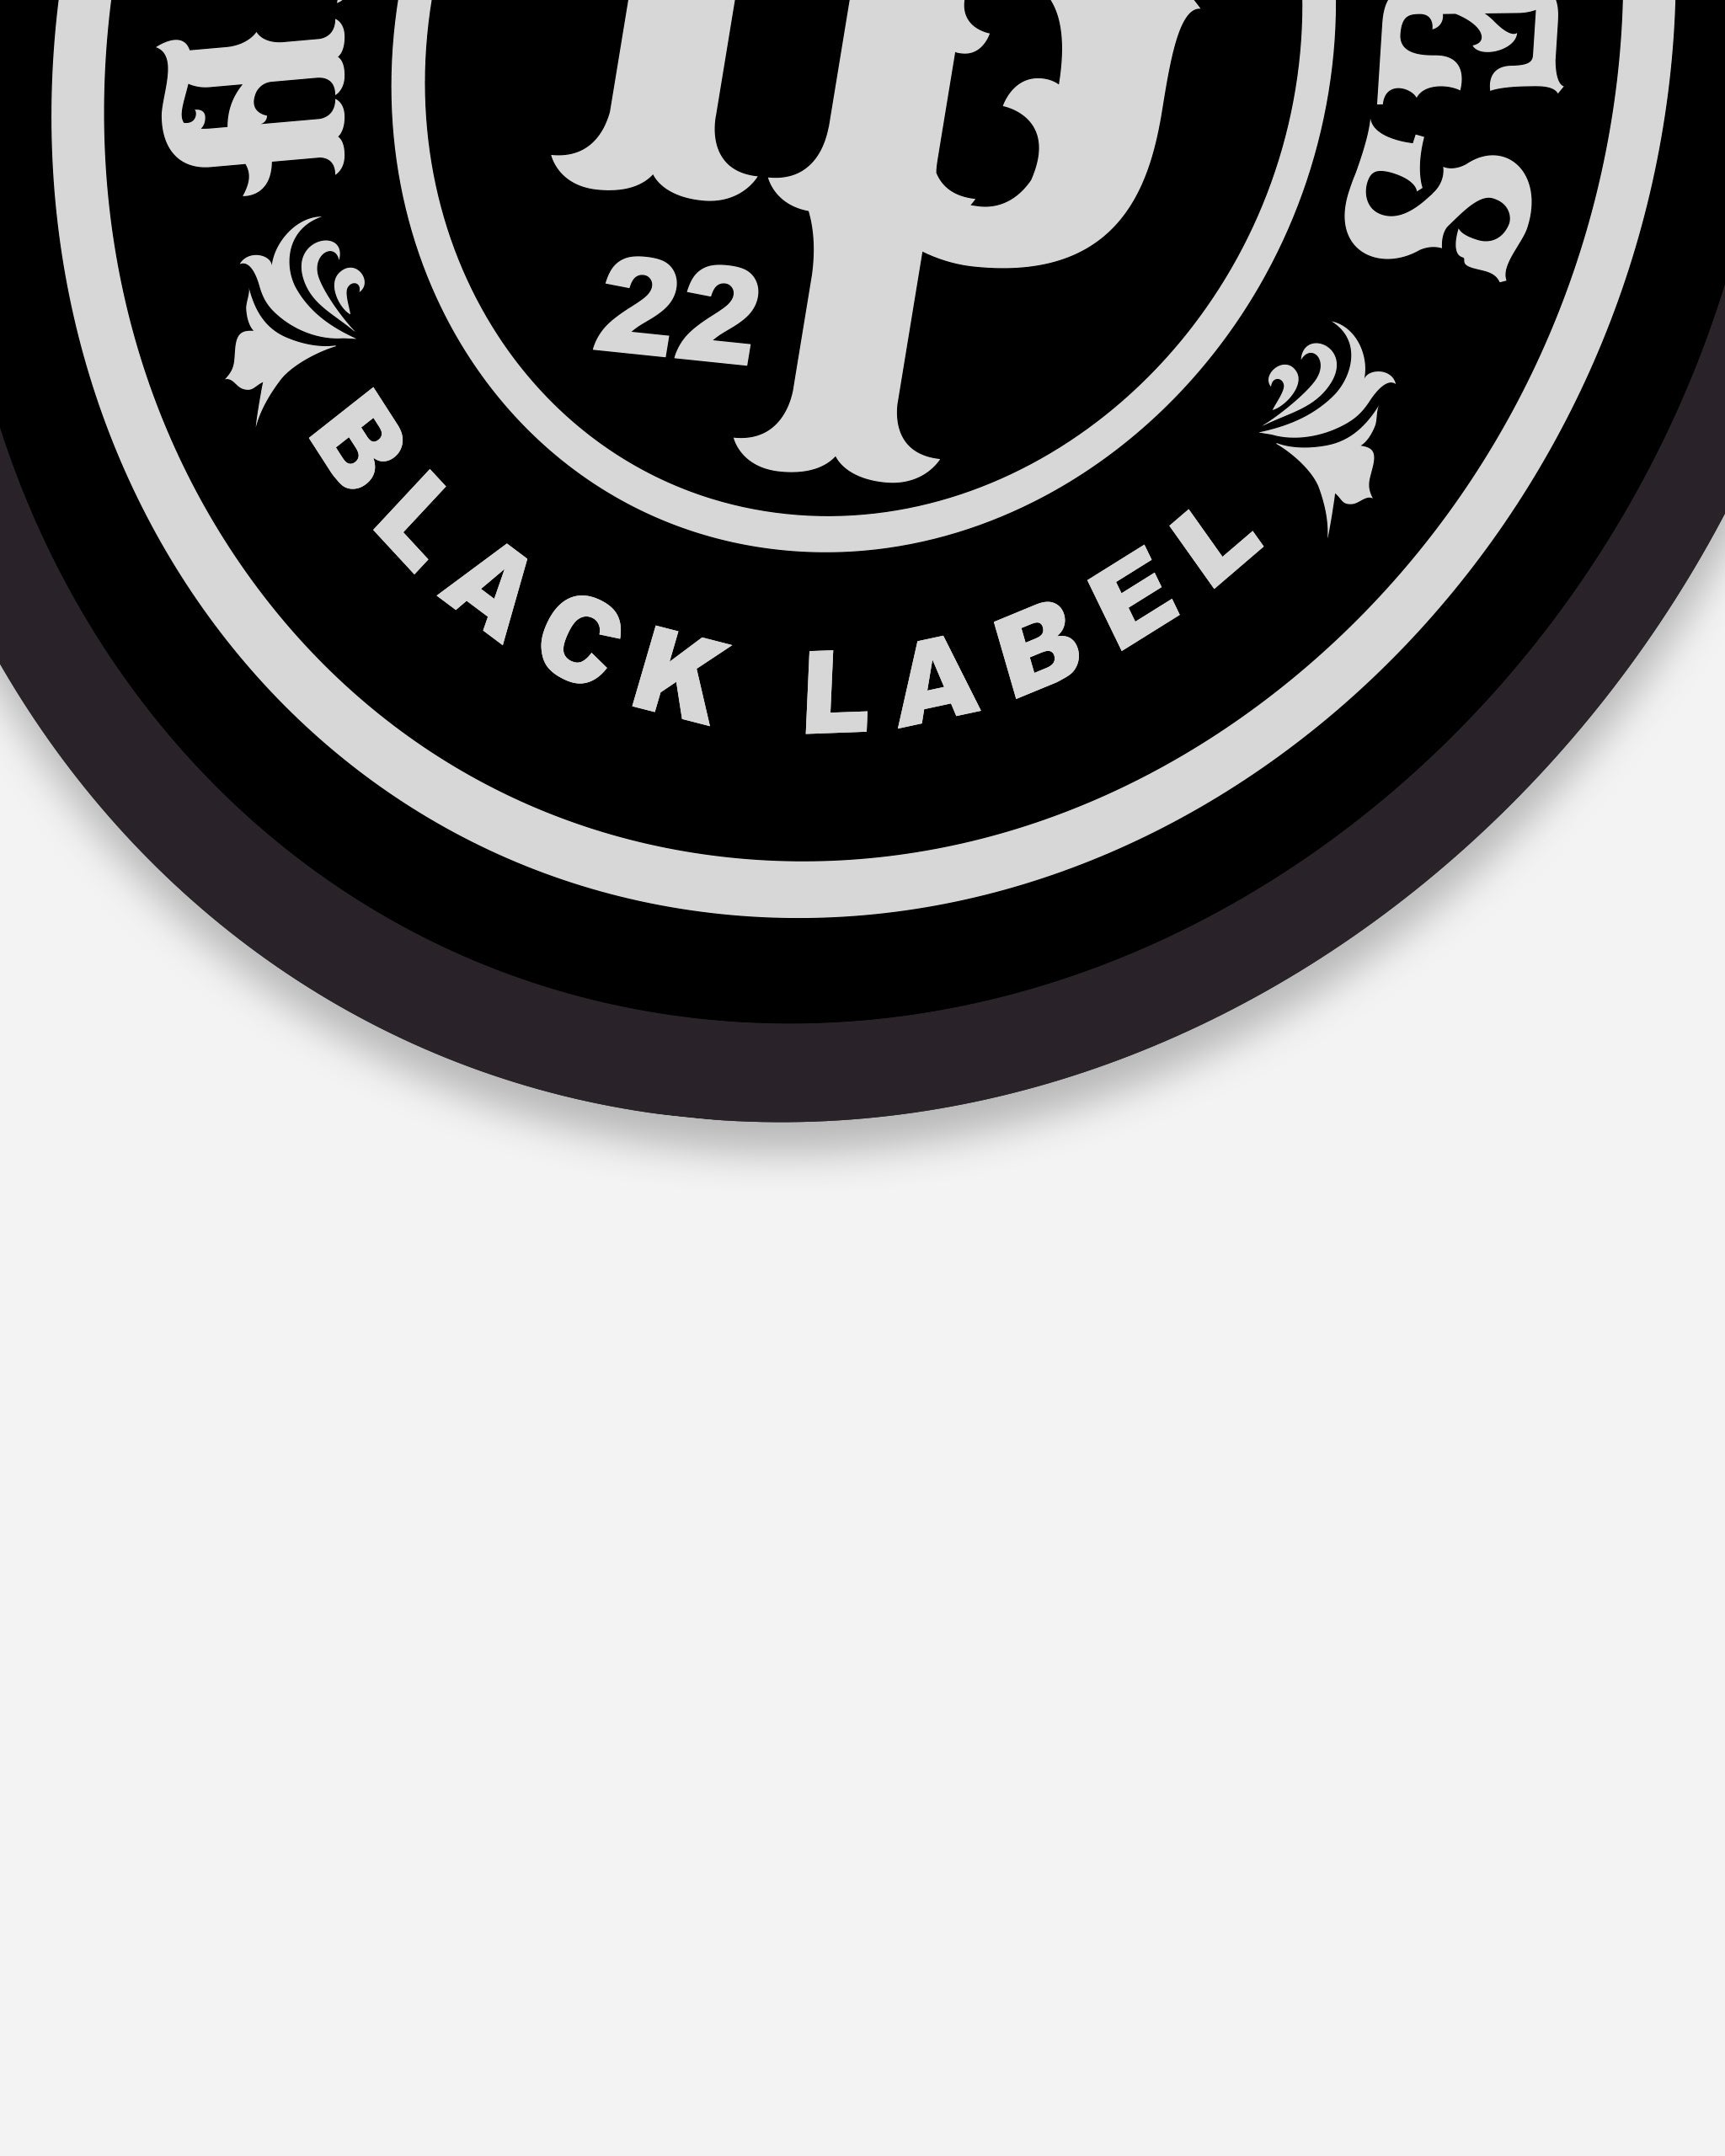 Adam's Black Label AP Air Freshener